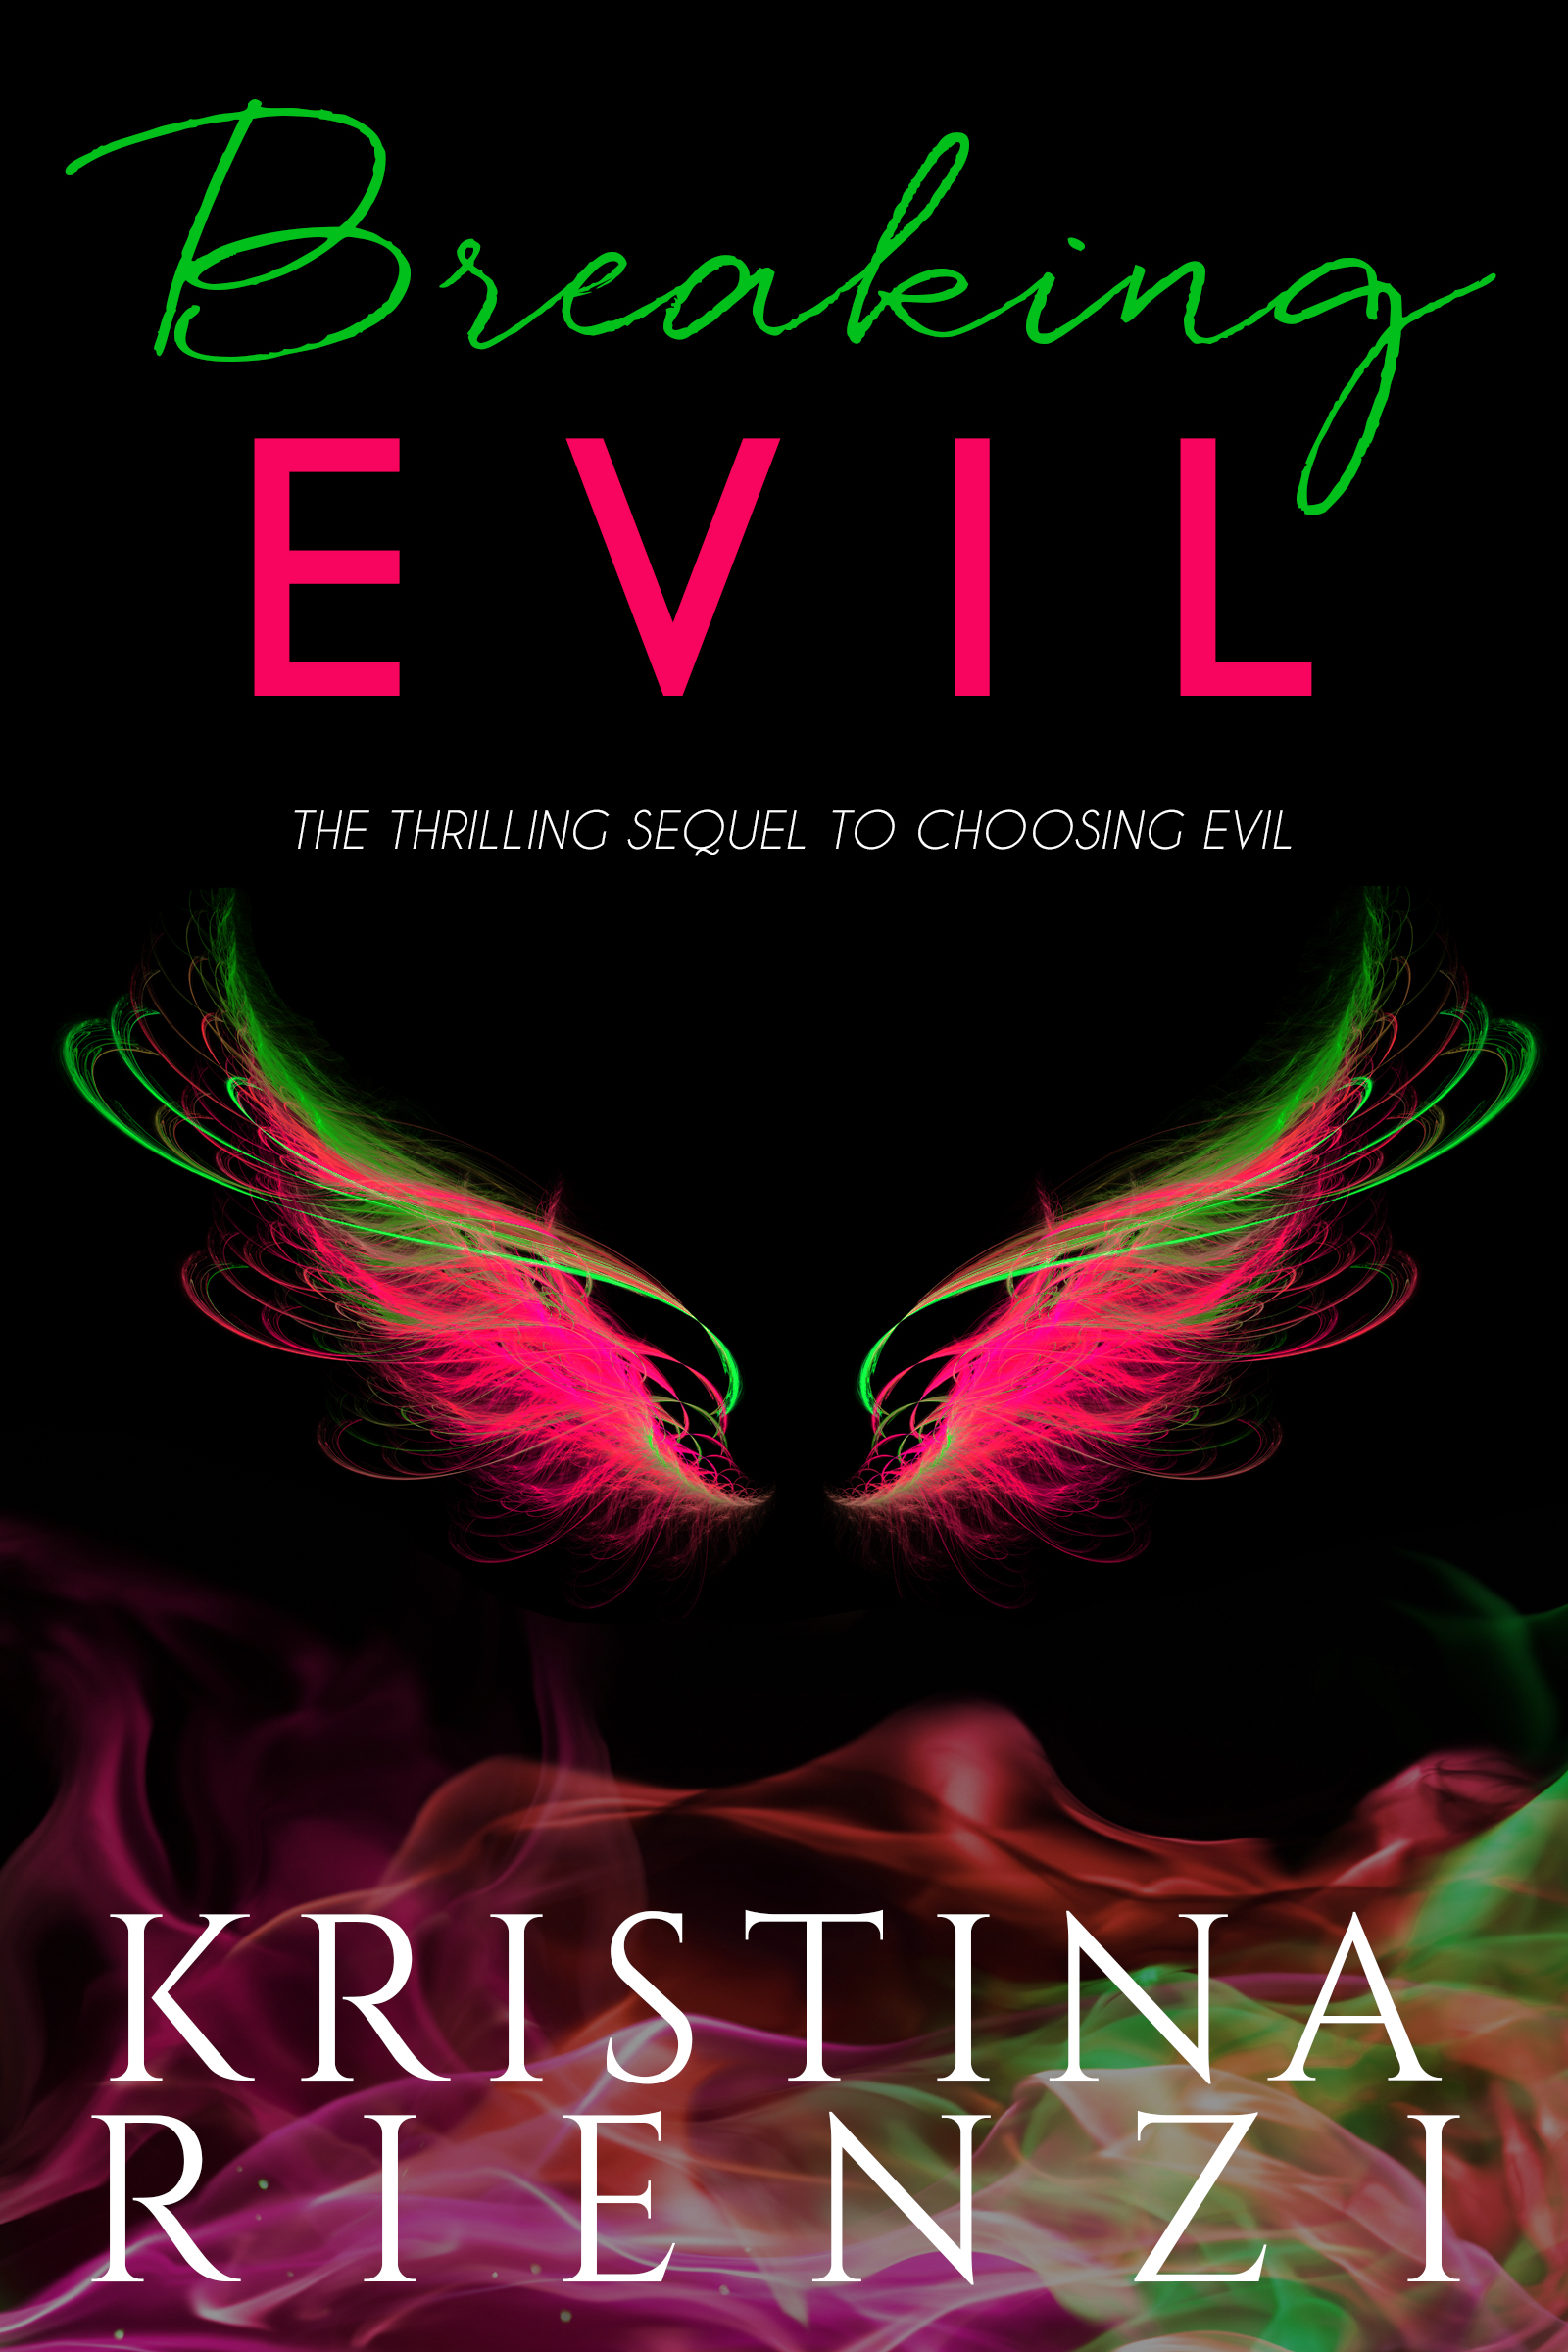 Breaking Evil by Kristina Rienzi